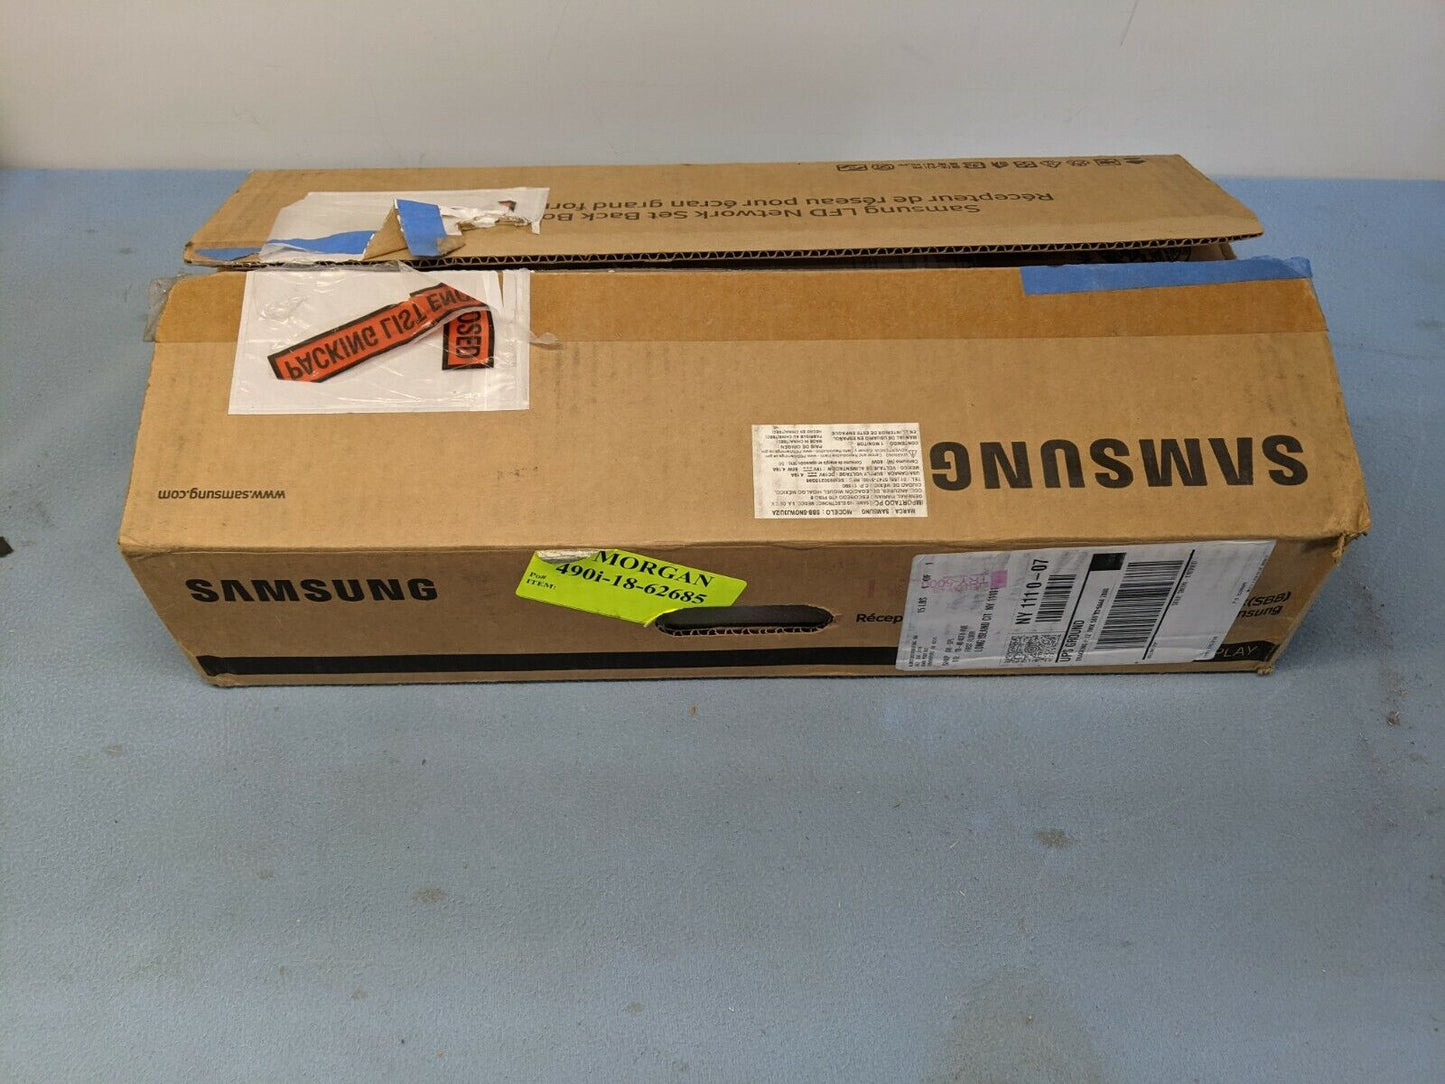 Samsung SNOW-1703ULD LFD Network Set Back Box Digital Signage Player